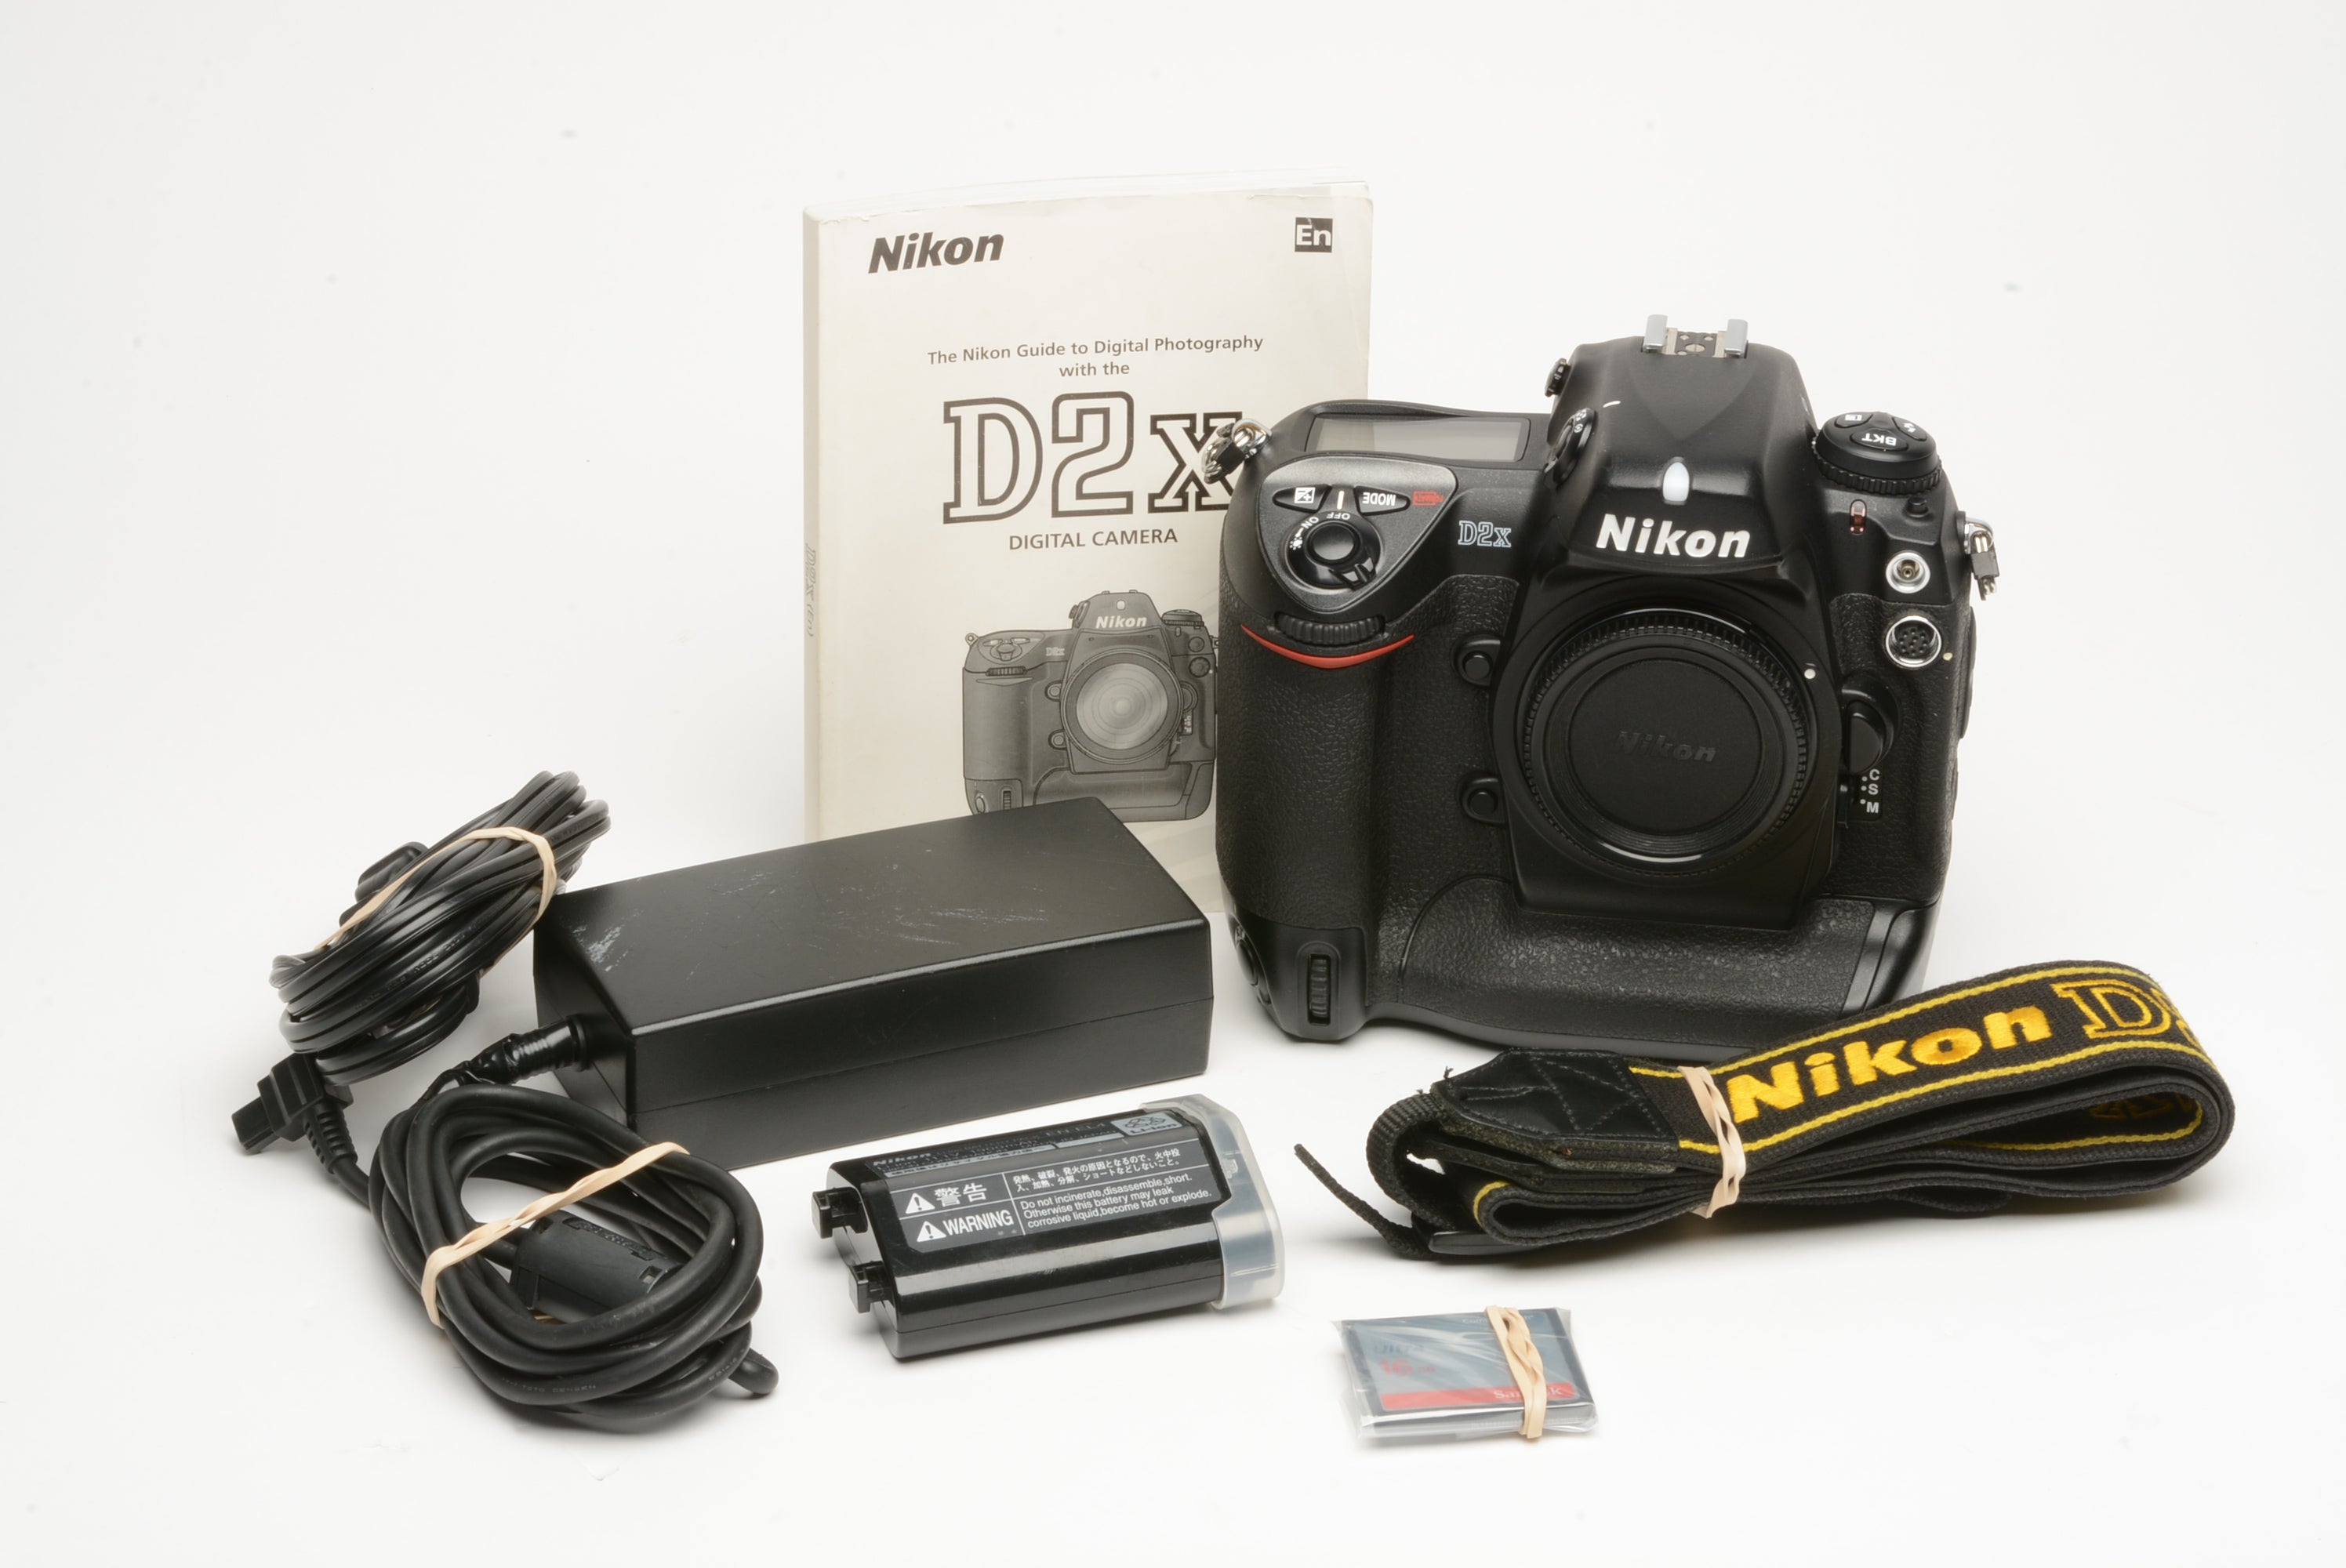 Nikon D2X DSLR Body, batt., AC Adapter, manual, 63,316 Acts, very clean,  tested